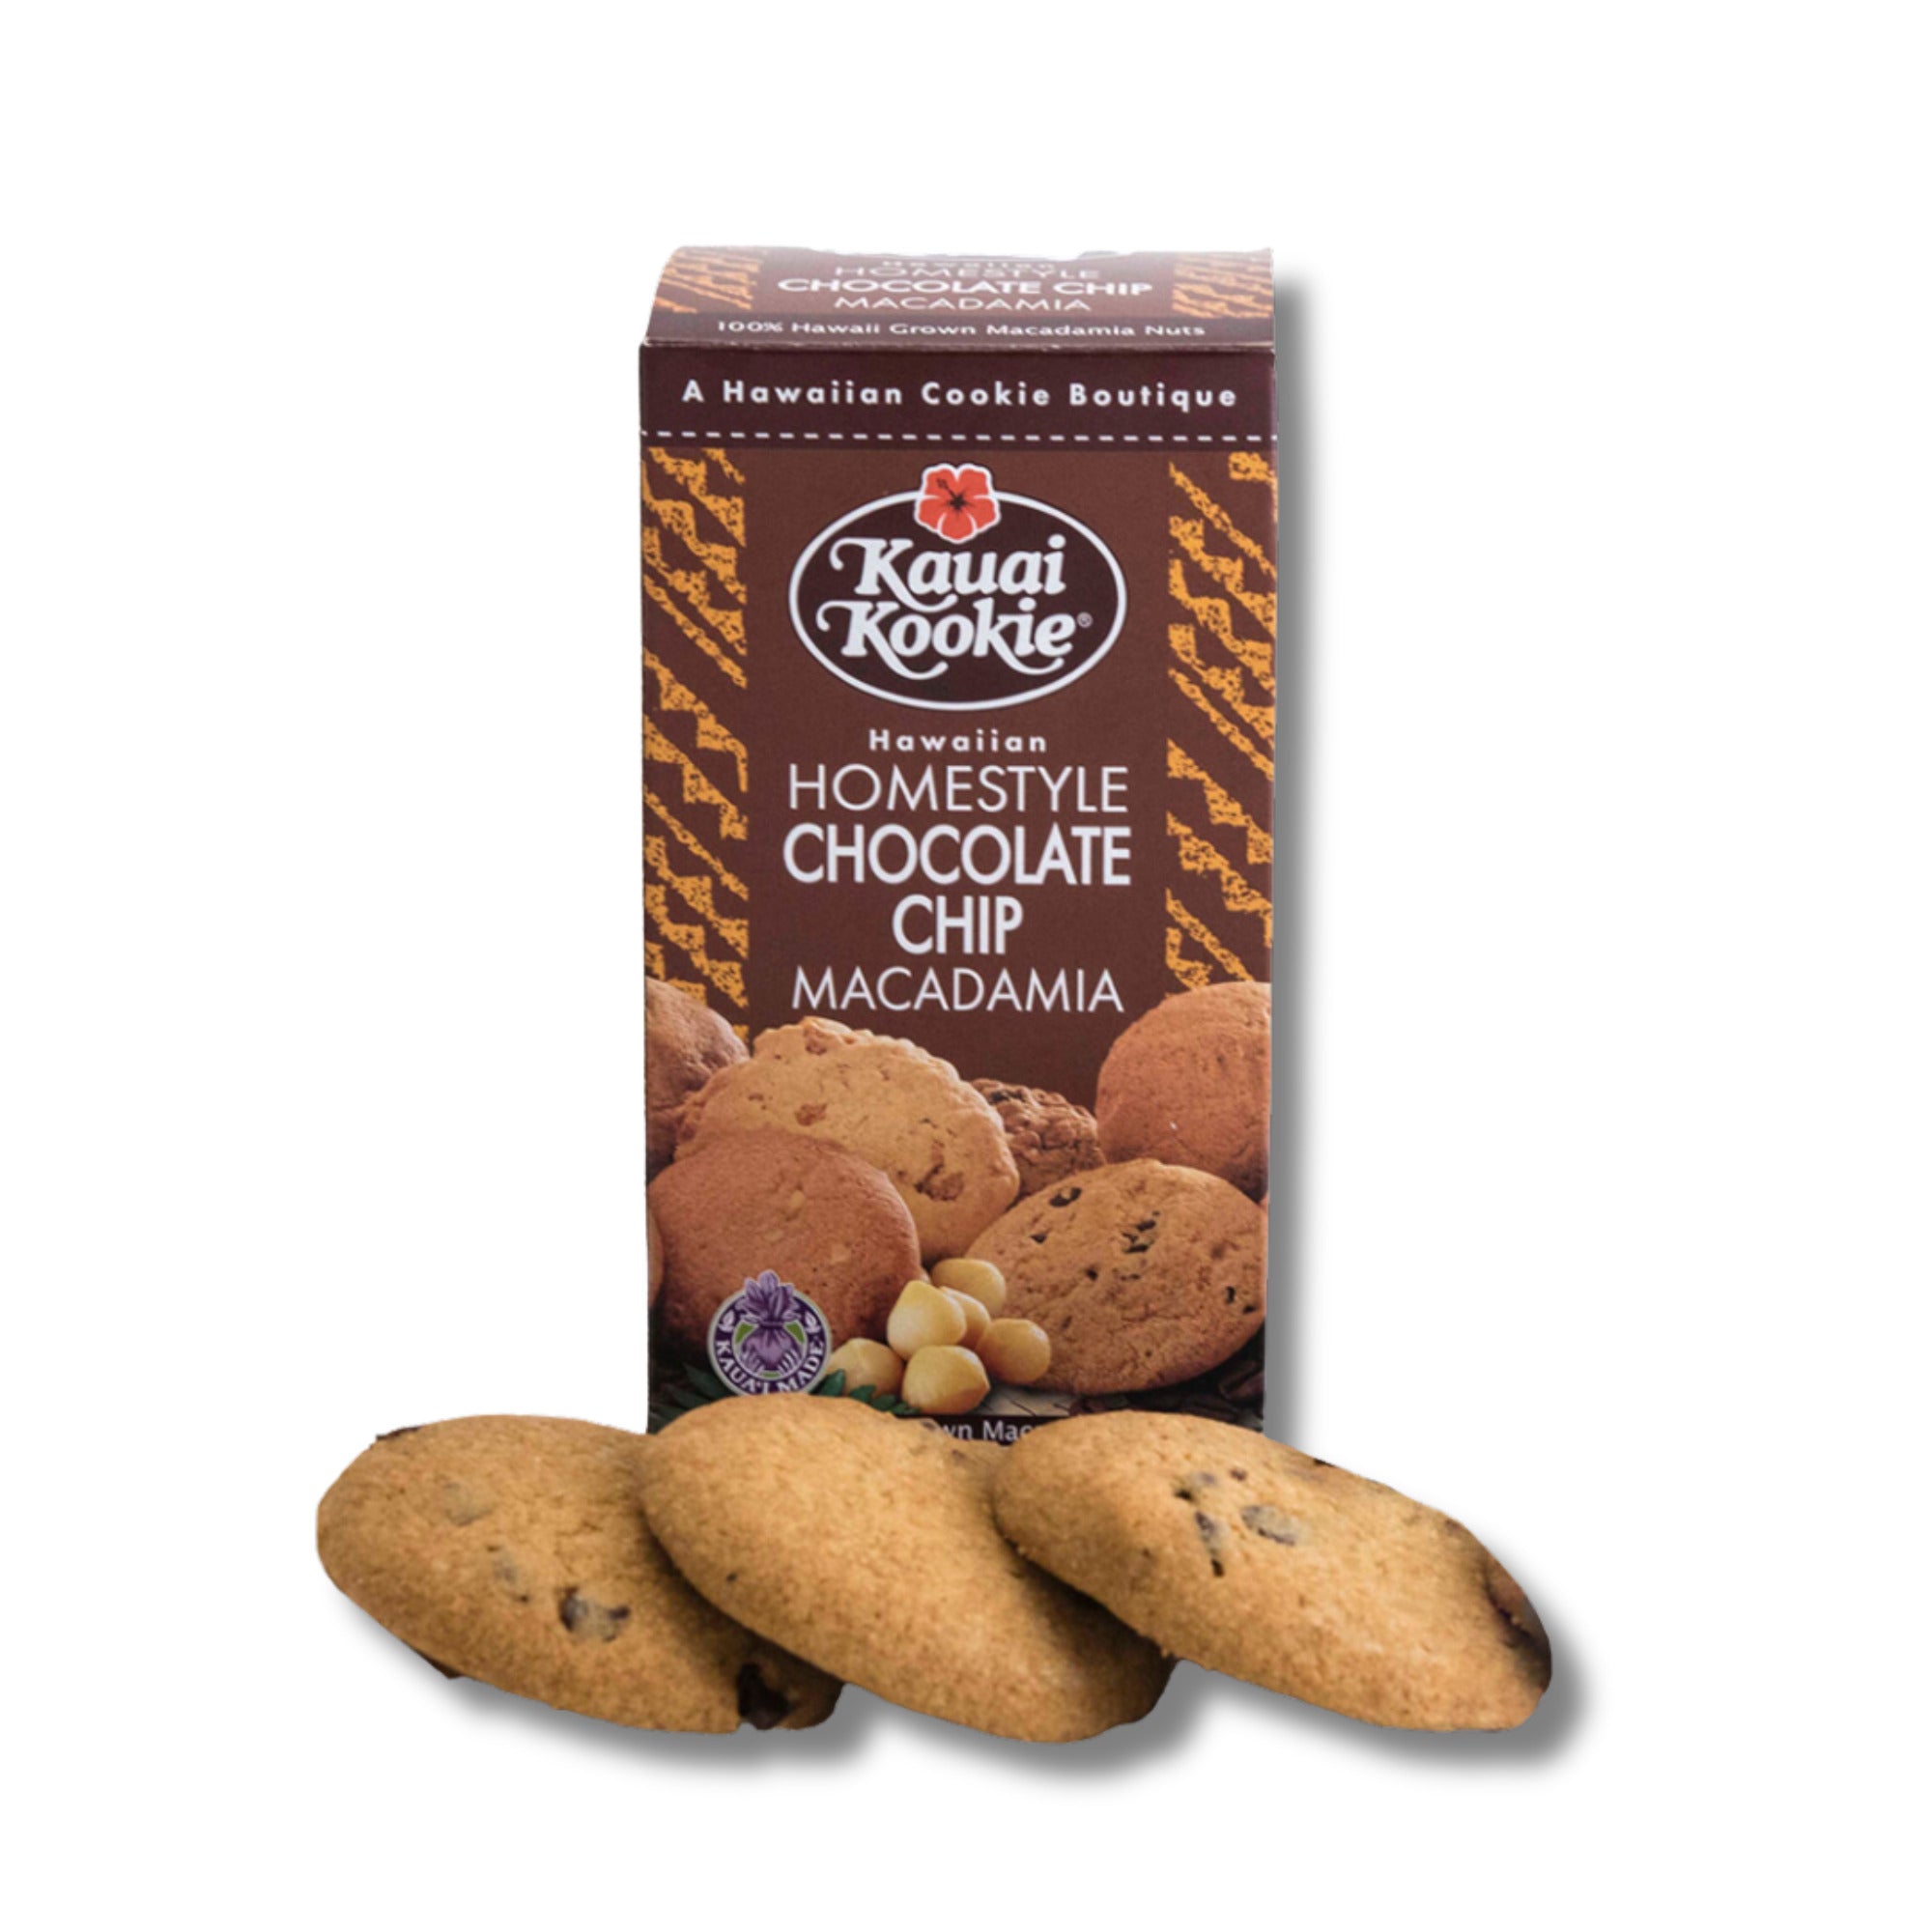 Pop-Up Mākeke - Kauai Kookie - Homestyle Chocolate Chip Macadamia Nut Cookies - 5oz